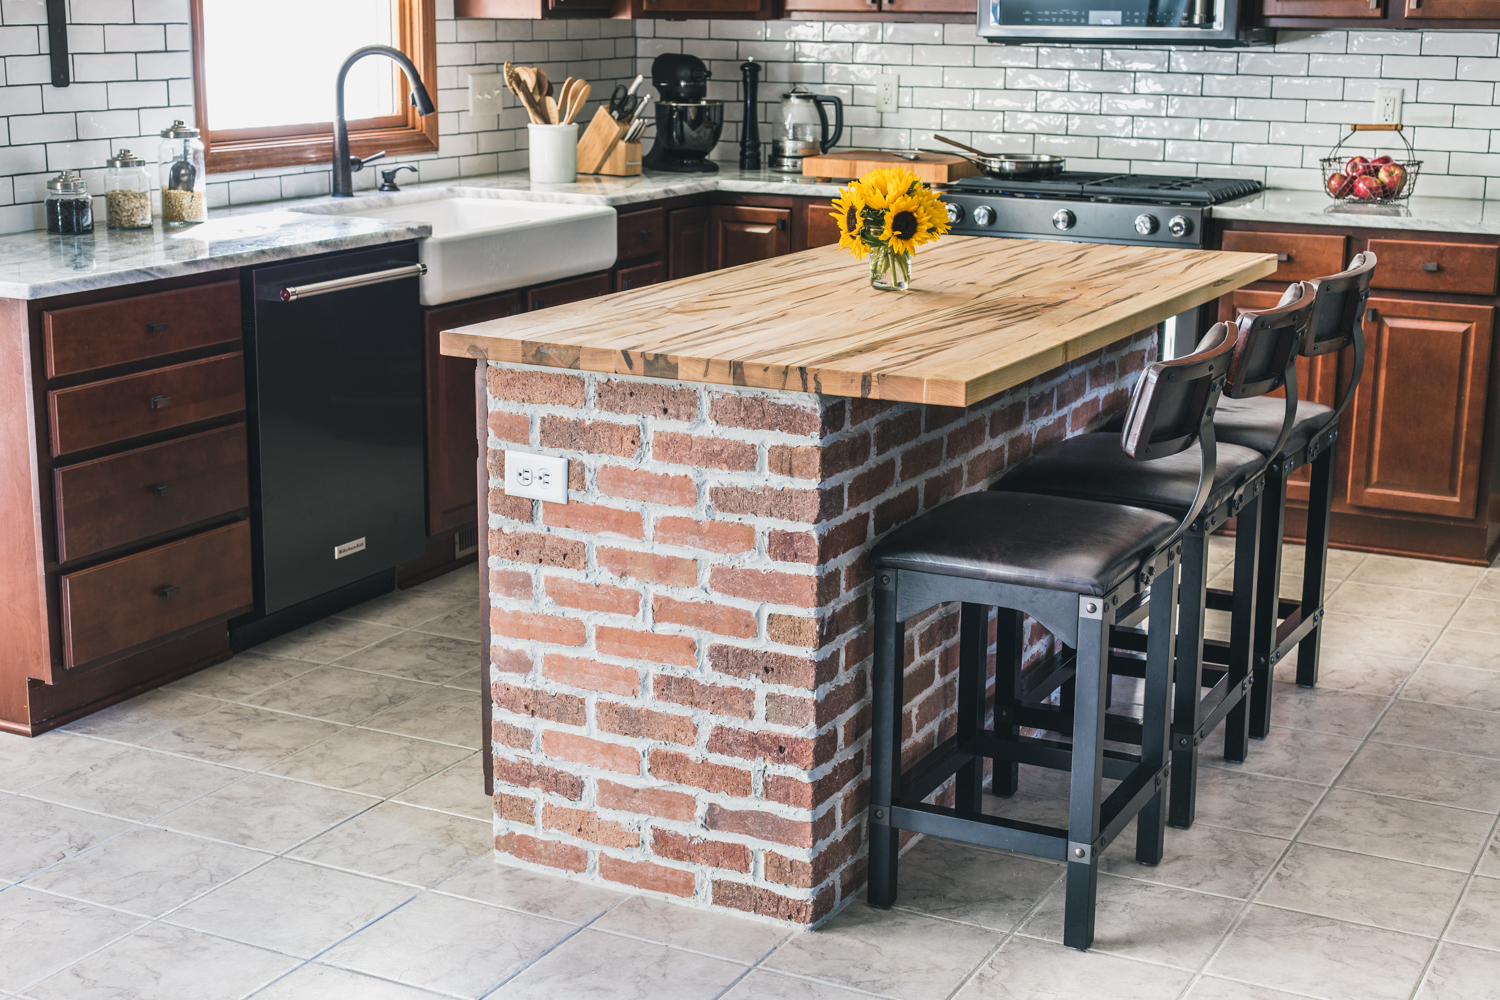 7 Ways to Update Your Kitchen With Brick